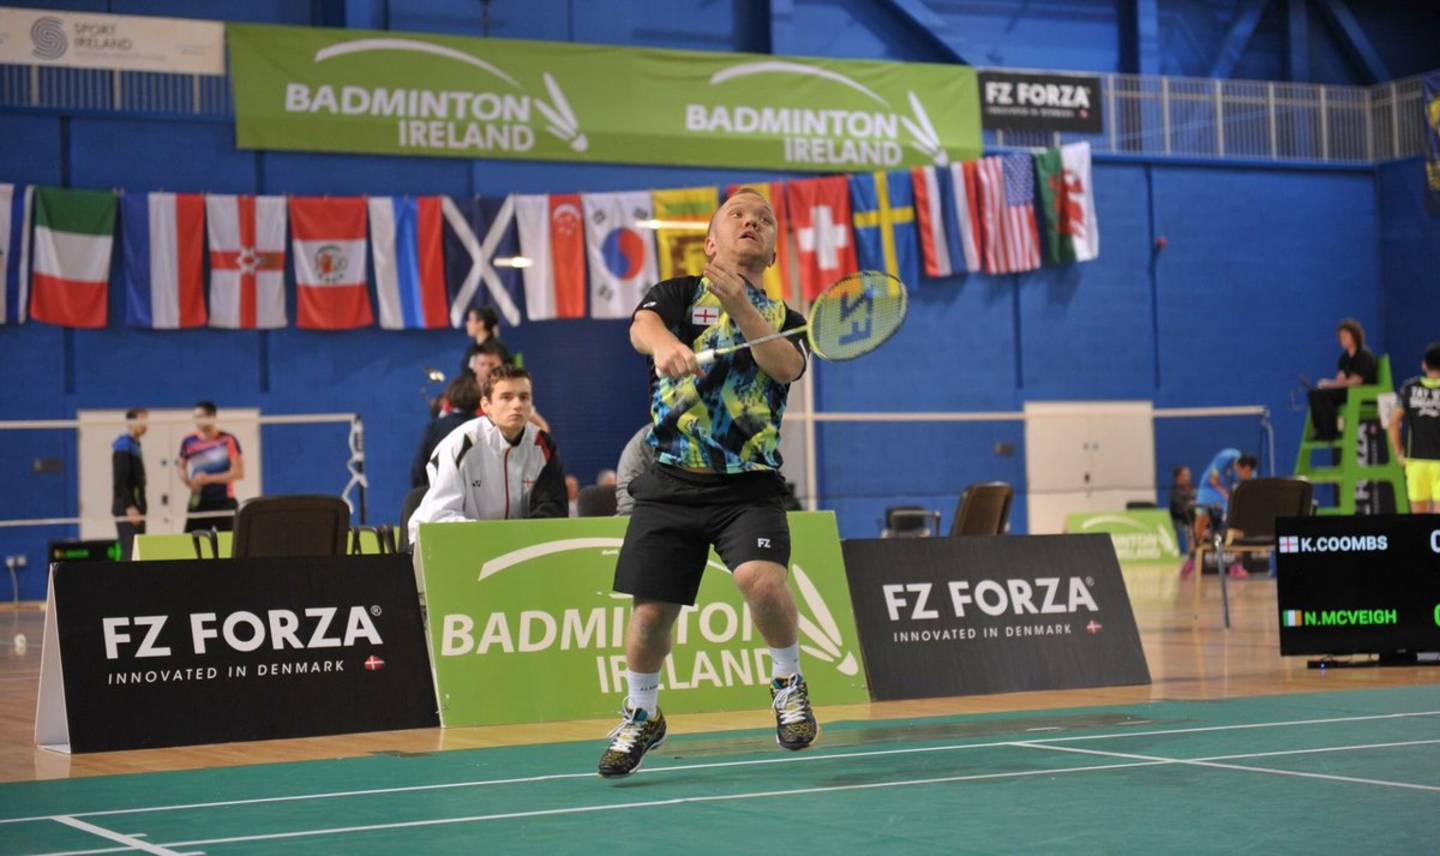 Krysten Coombs playing badminton